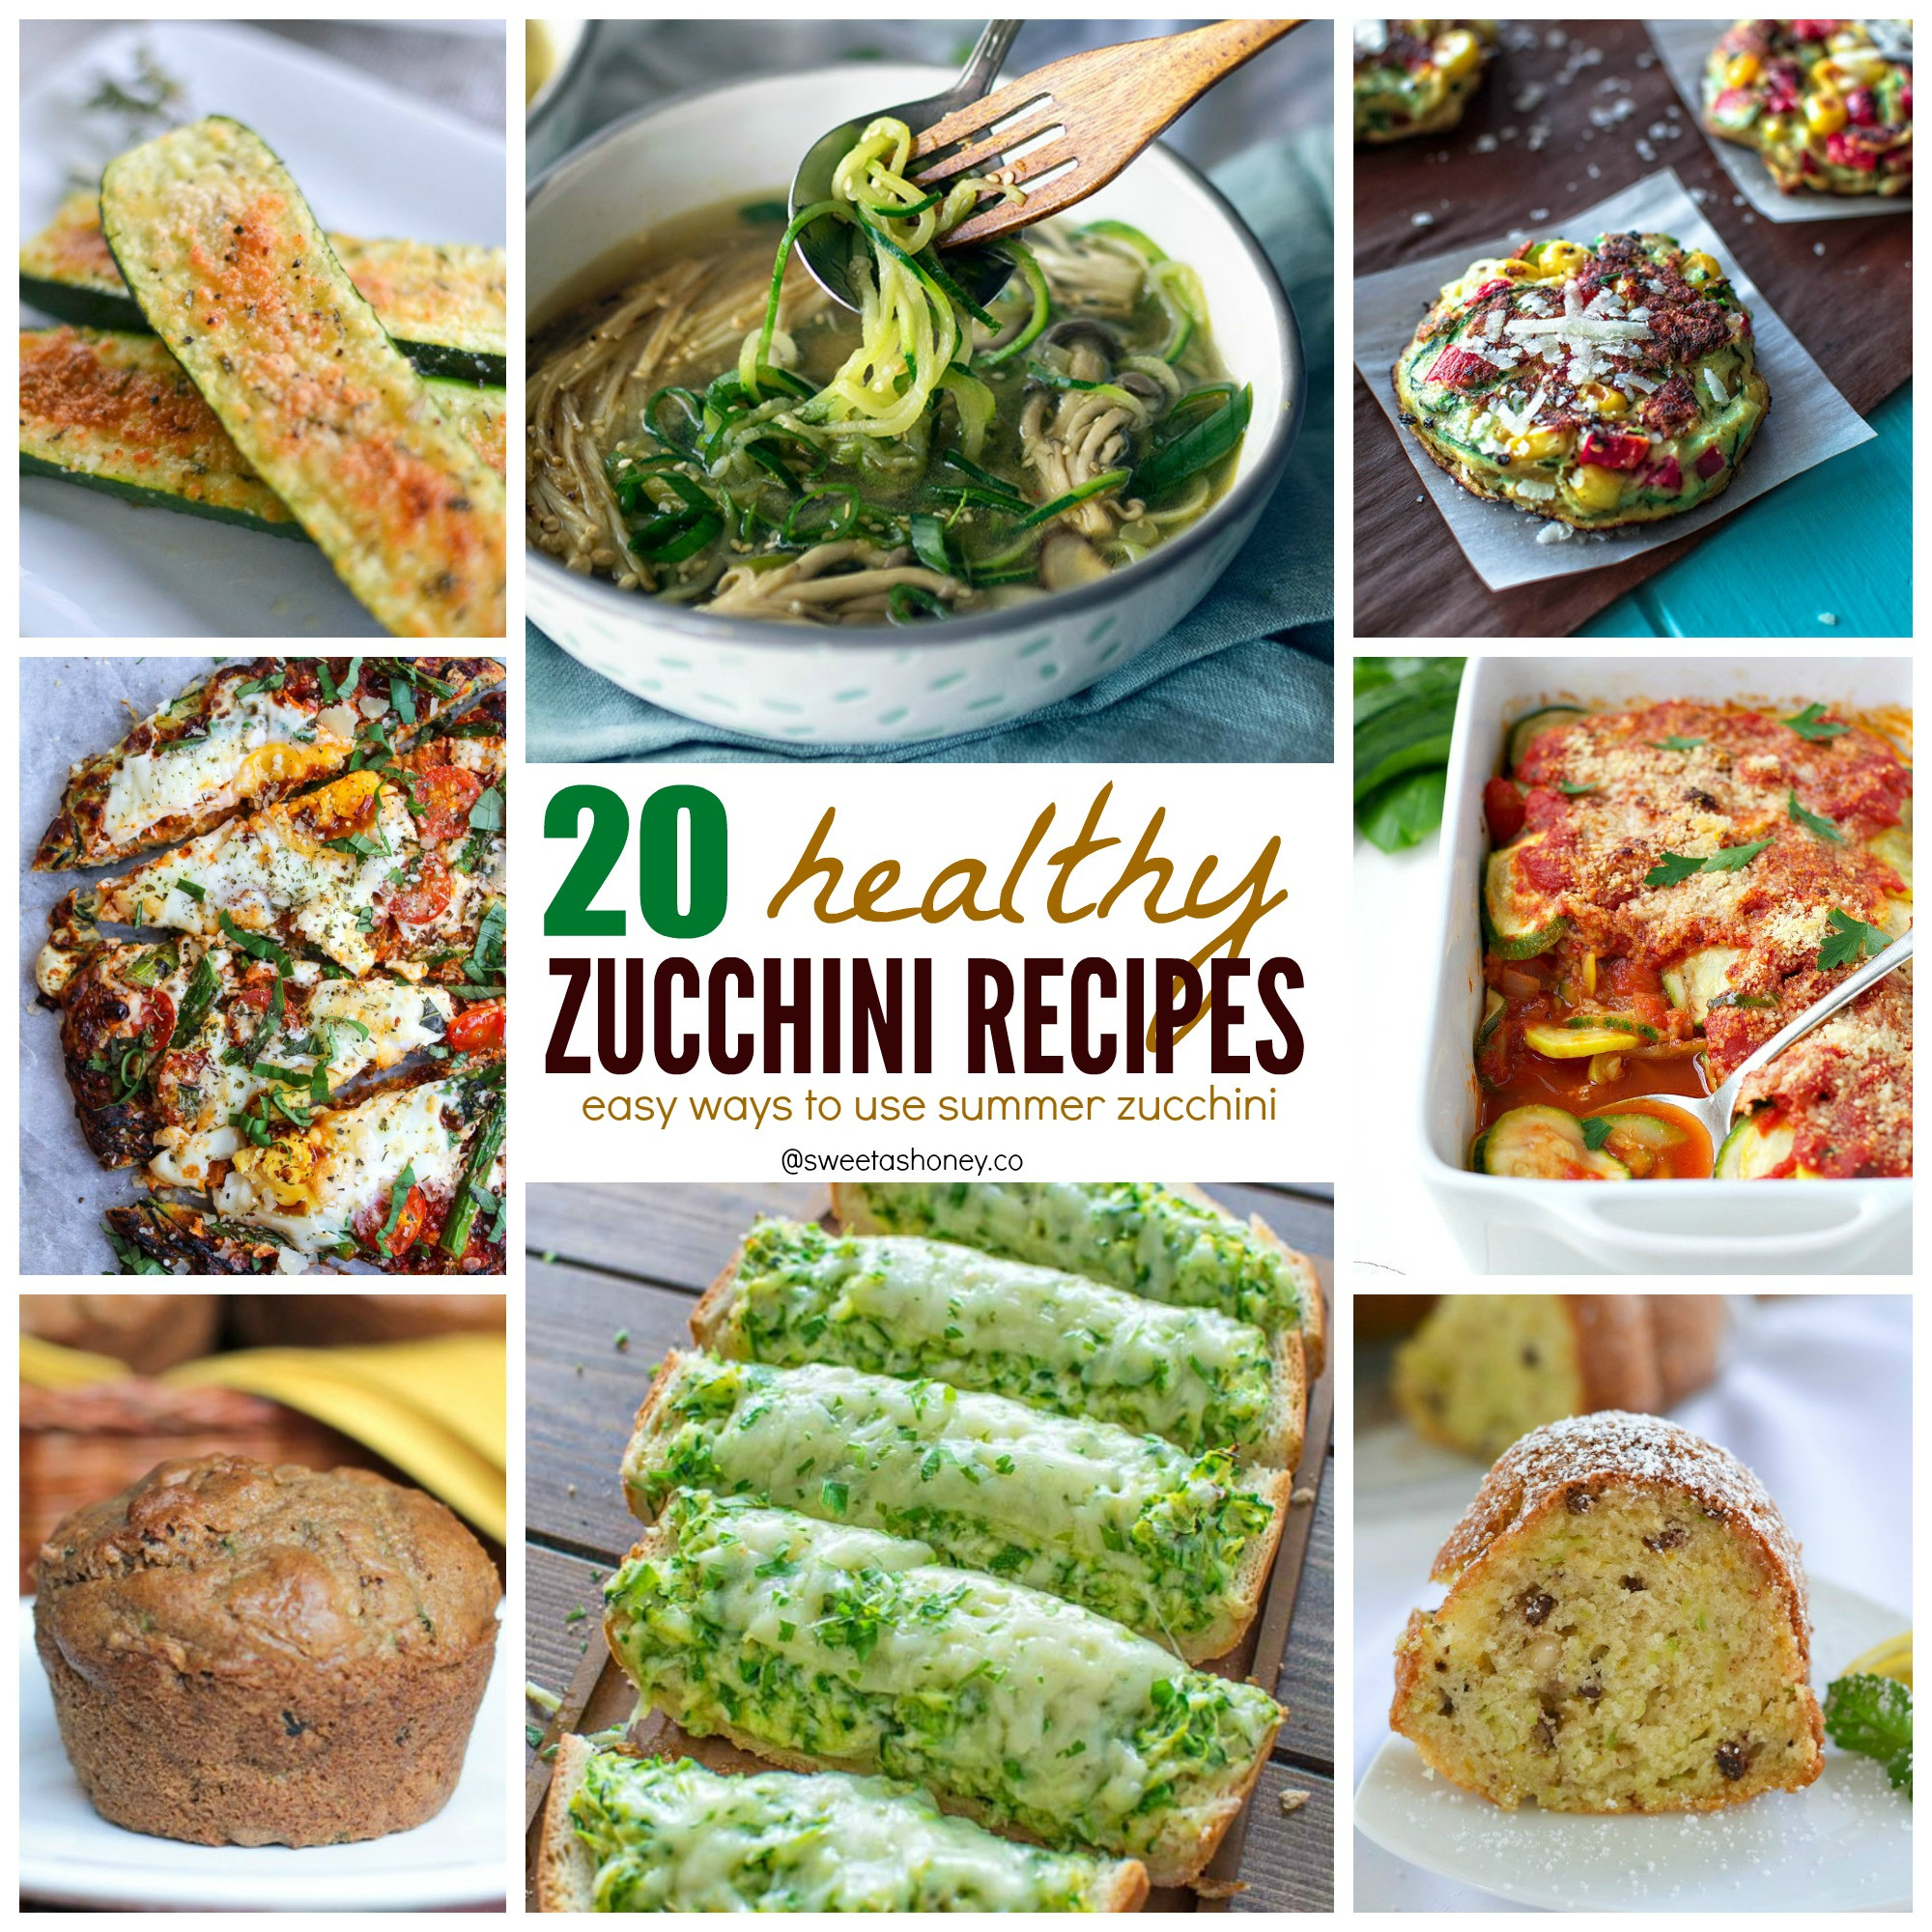 Zucchini Recipe Healthy
 Healthy Zucchini Recipes 20 Easy Ways to Use Zucchini